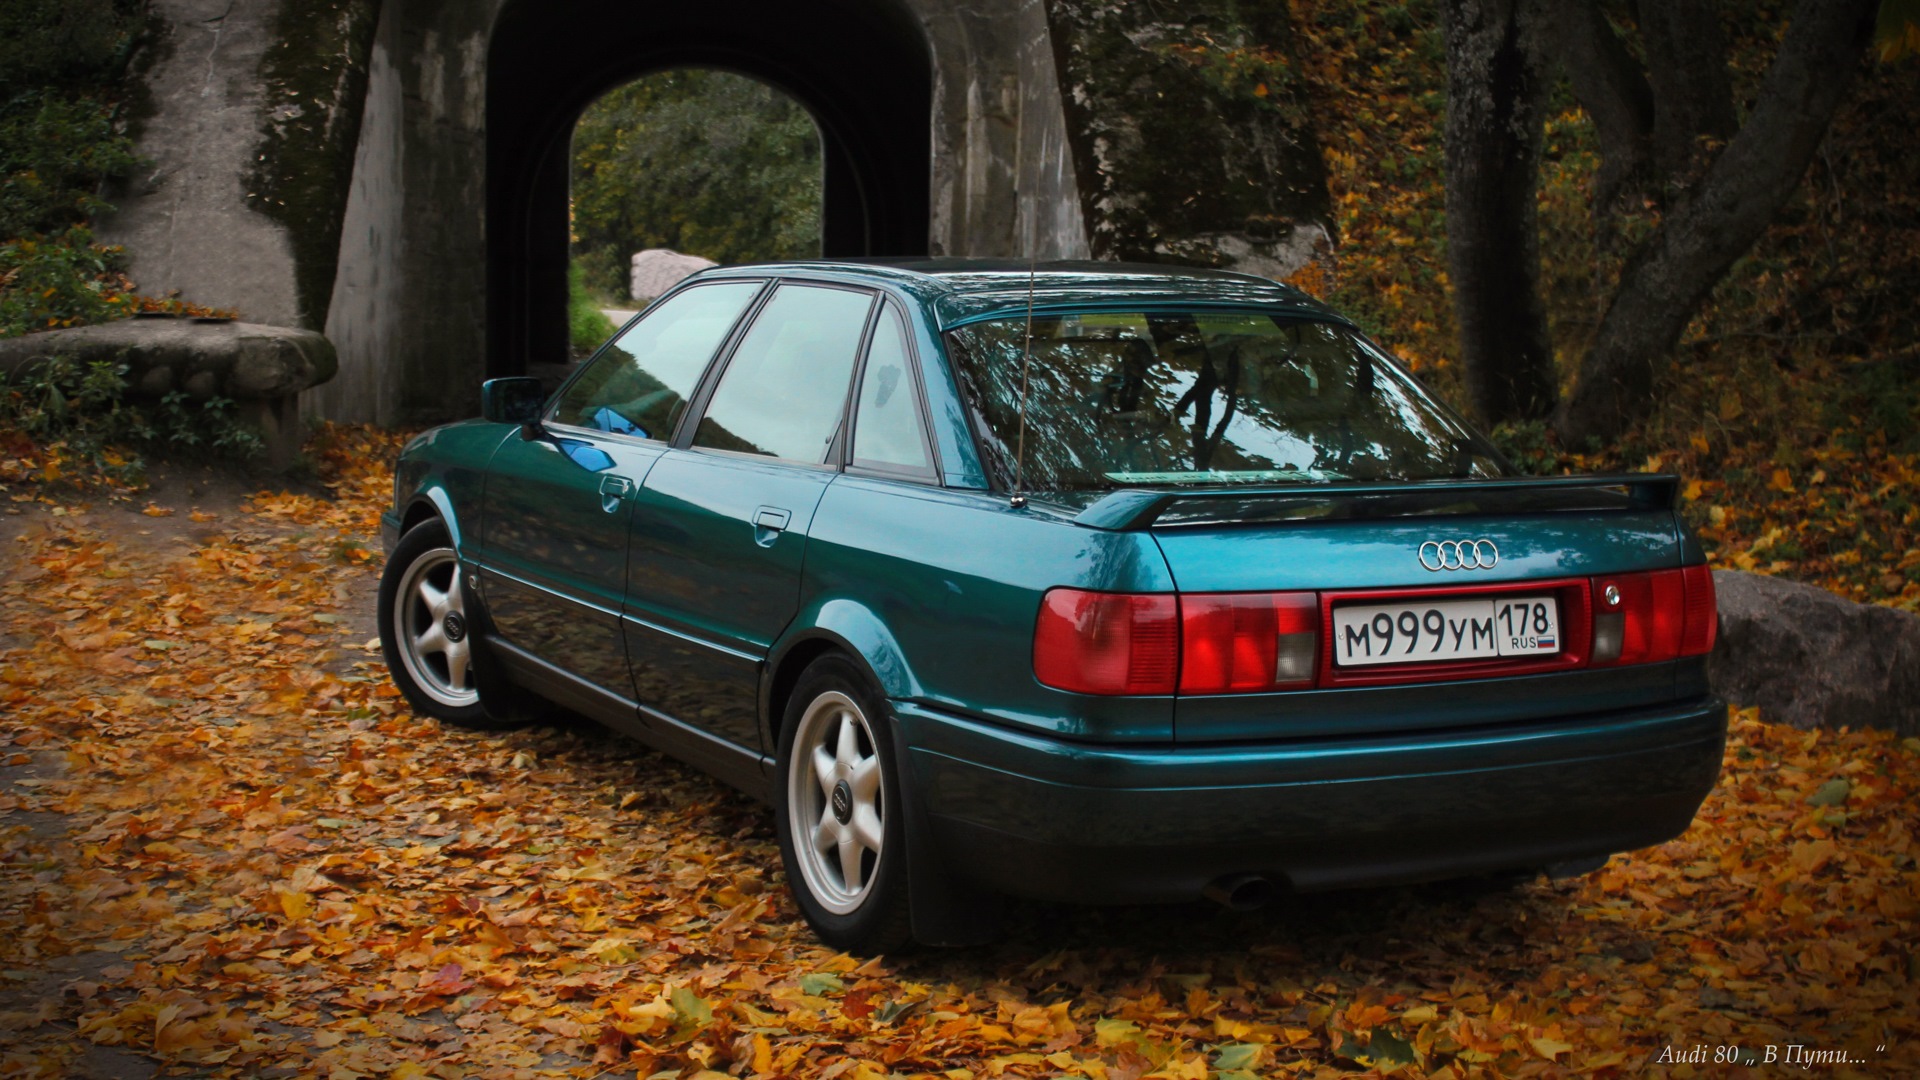 Audi 80 b4 s2. Ауди 80 б4. Ауди 80 б4 зеленая. Ауди 80 в 4 кузове. Купить ауди 80 в4